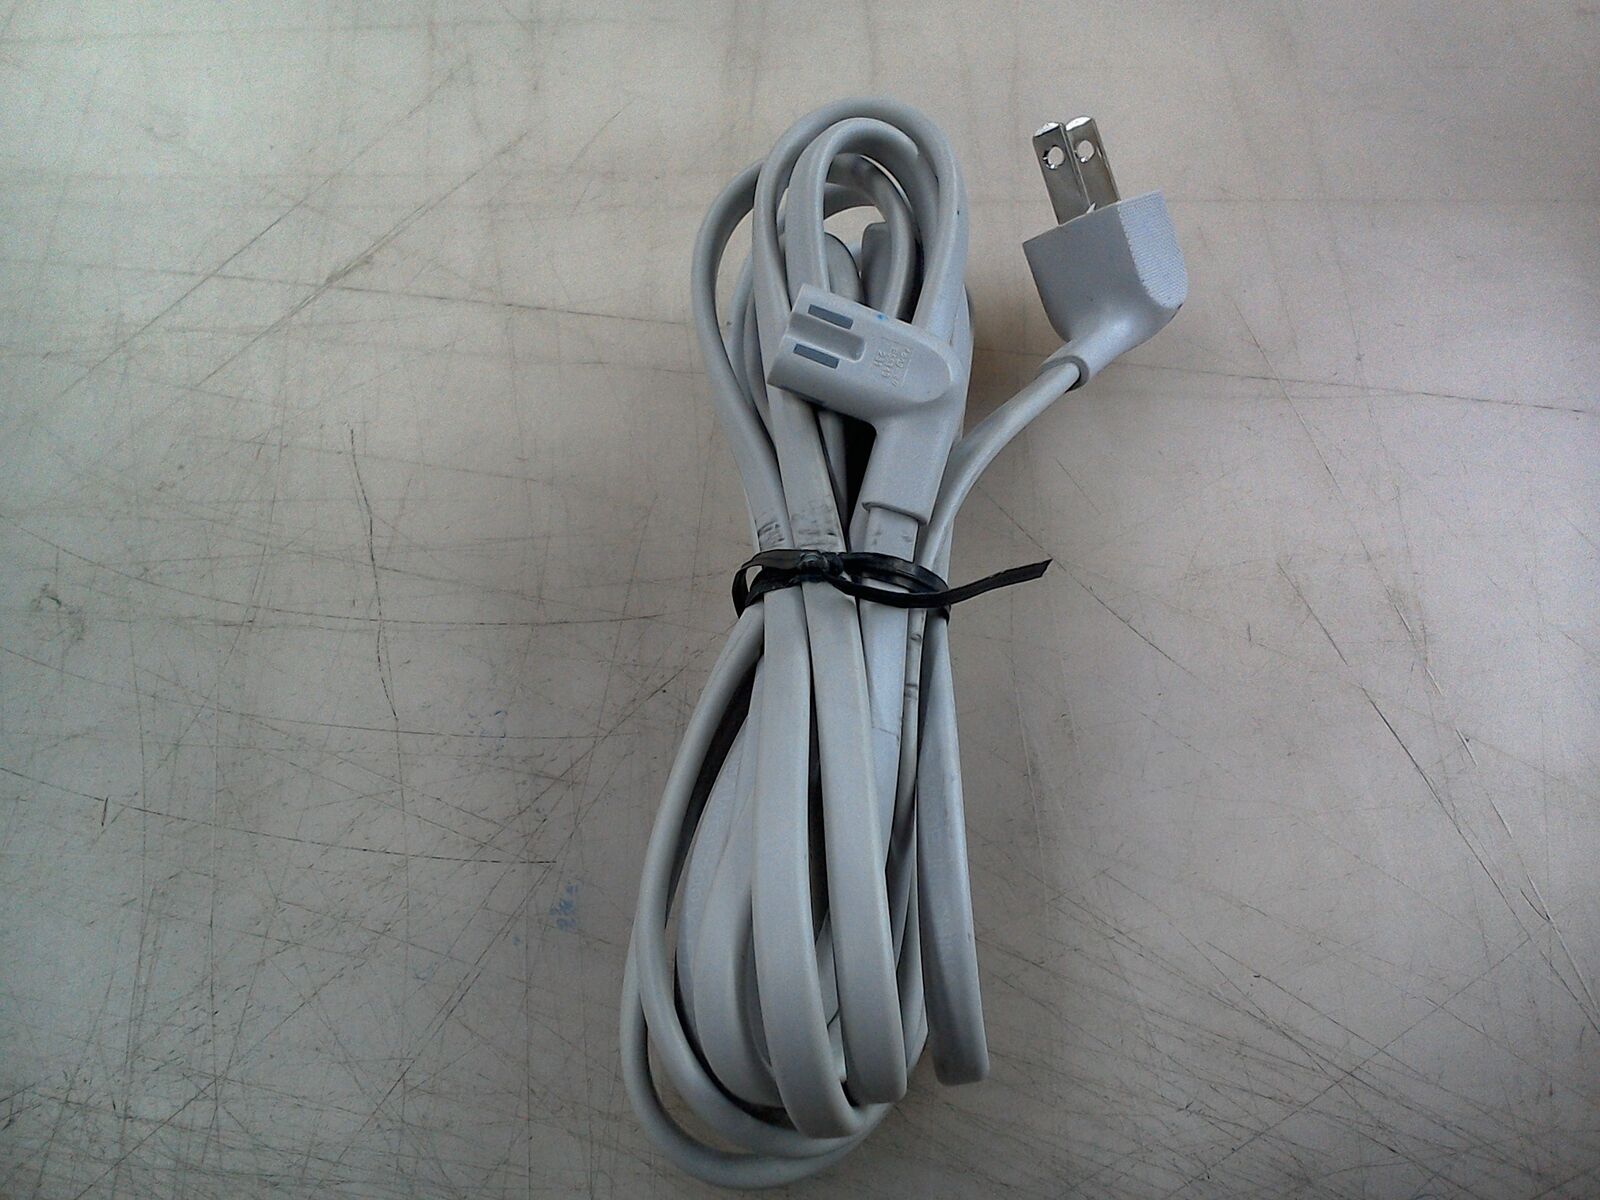 Original SAMSUNG QN75Q90TAF Power Cable Cord (USED)